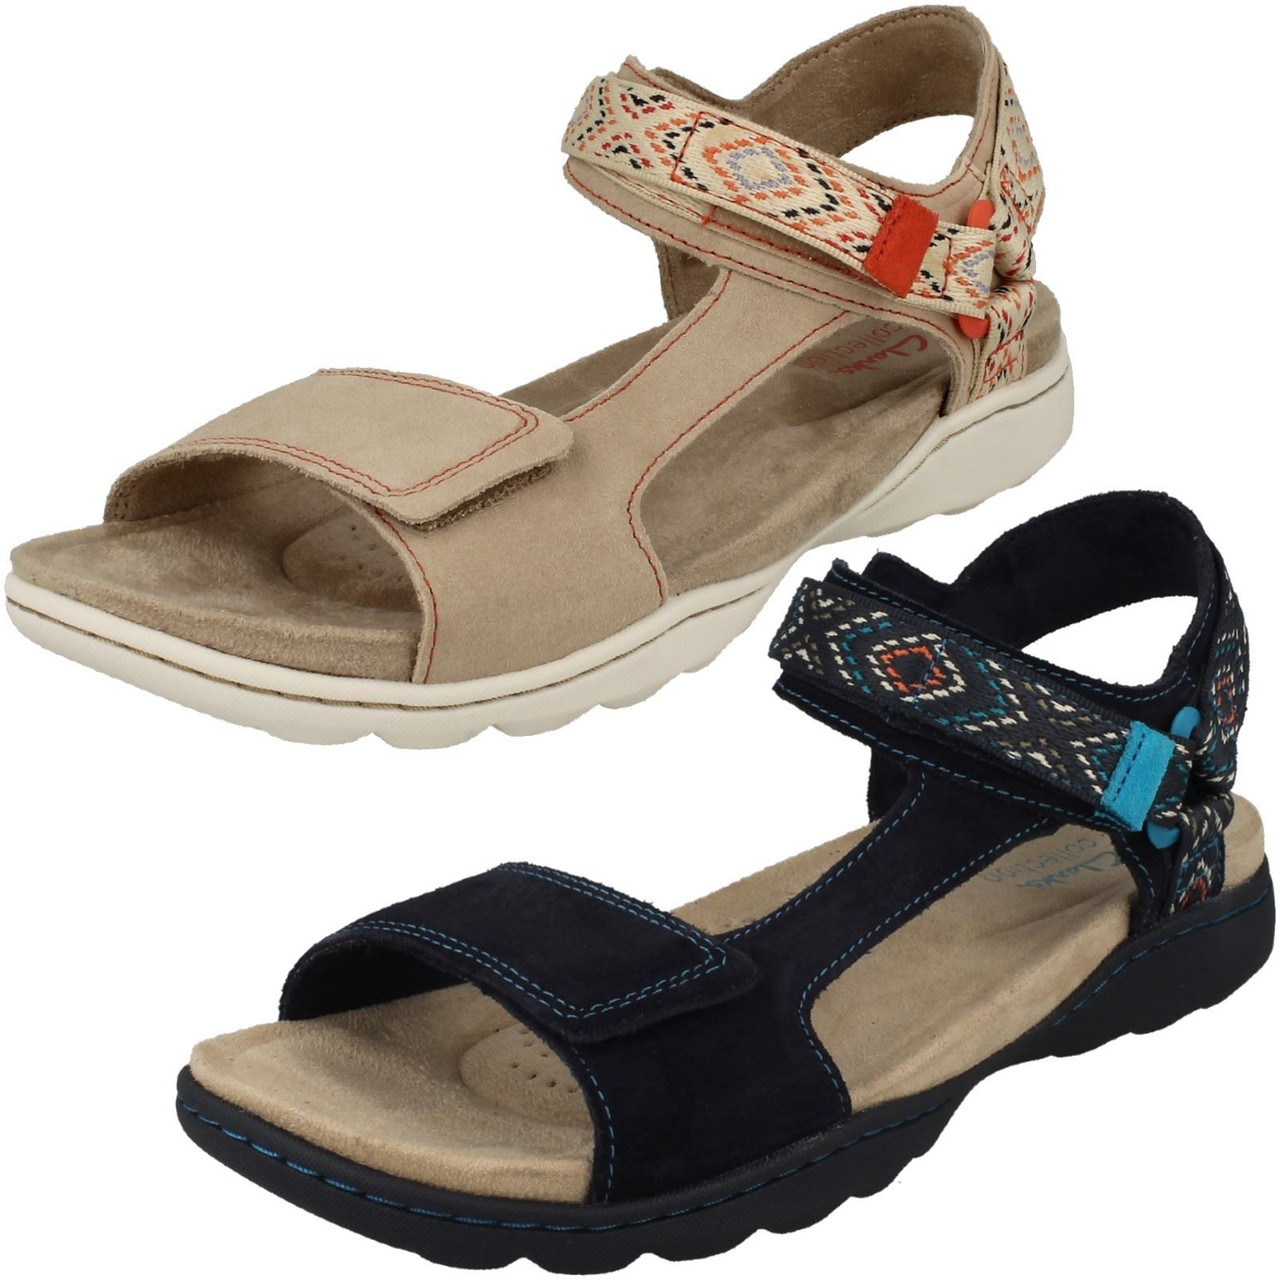 Fragua ala Contratar Ladies Clarks Aztec Detailed Strappy Sandals - Amanda Step